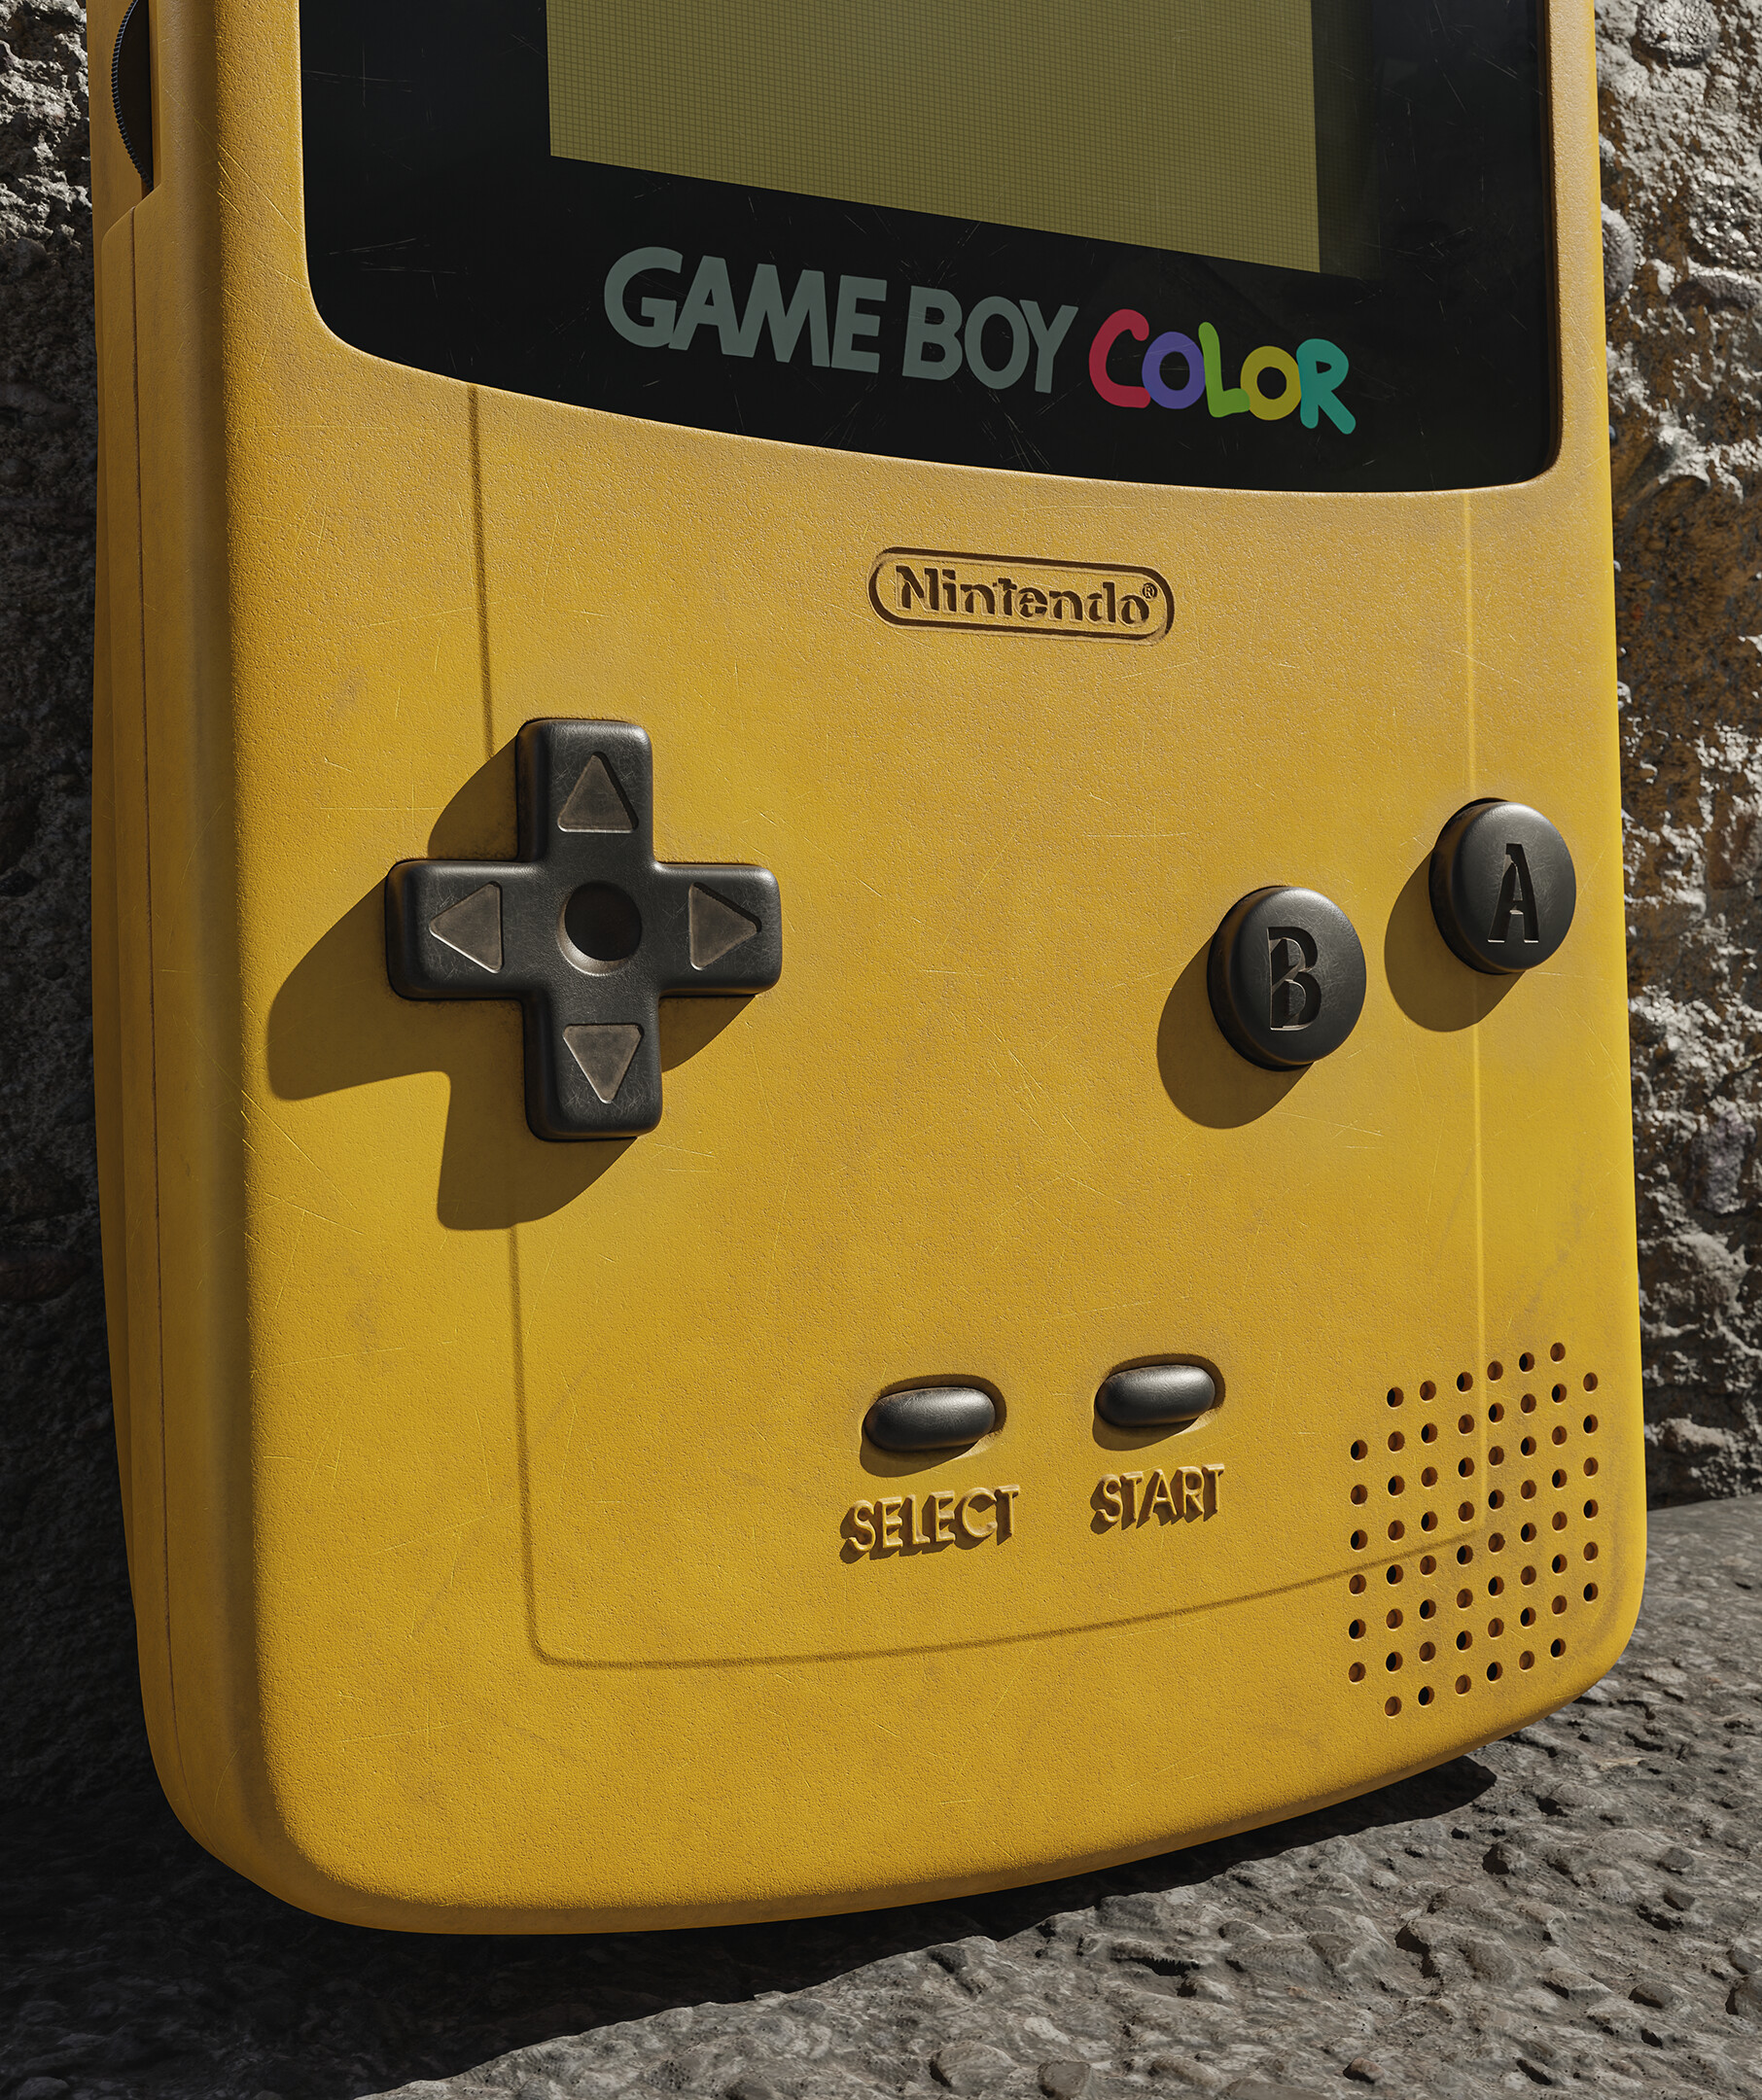 ArtStation - Nintendo Game Boy Color - Film